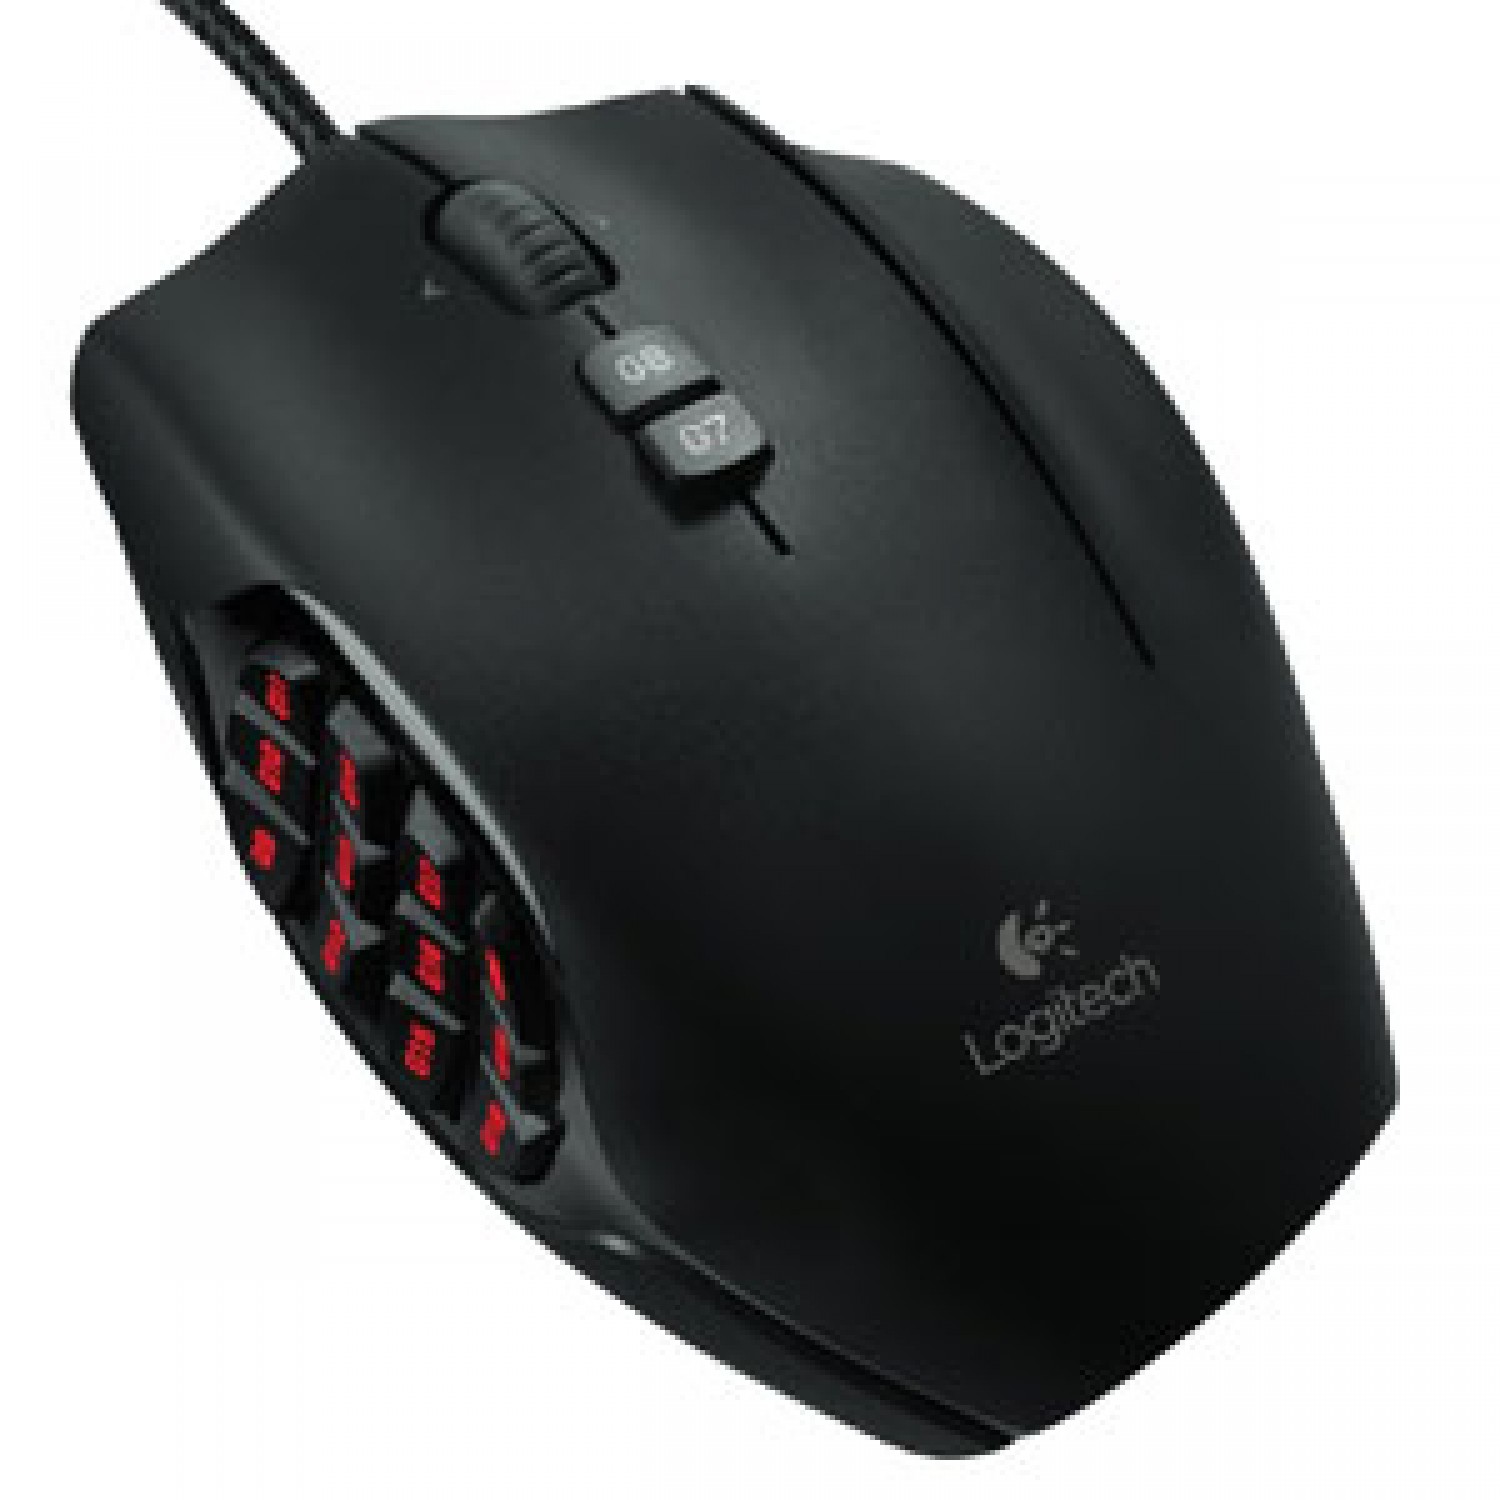 Logitech G600 MMO Black Gaming Mouse